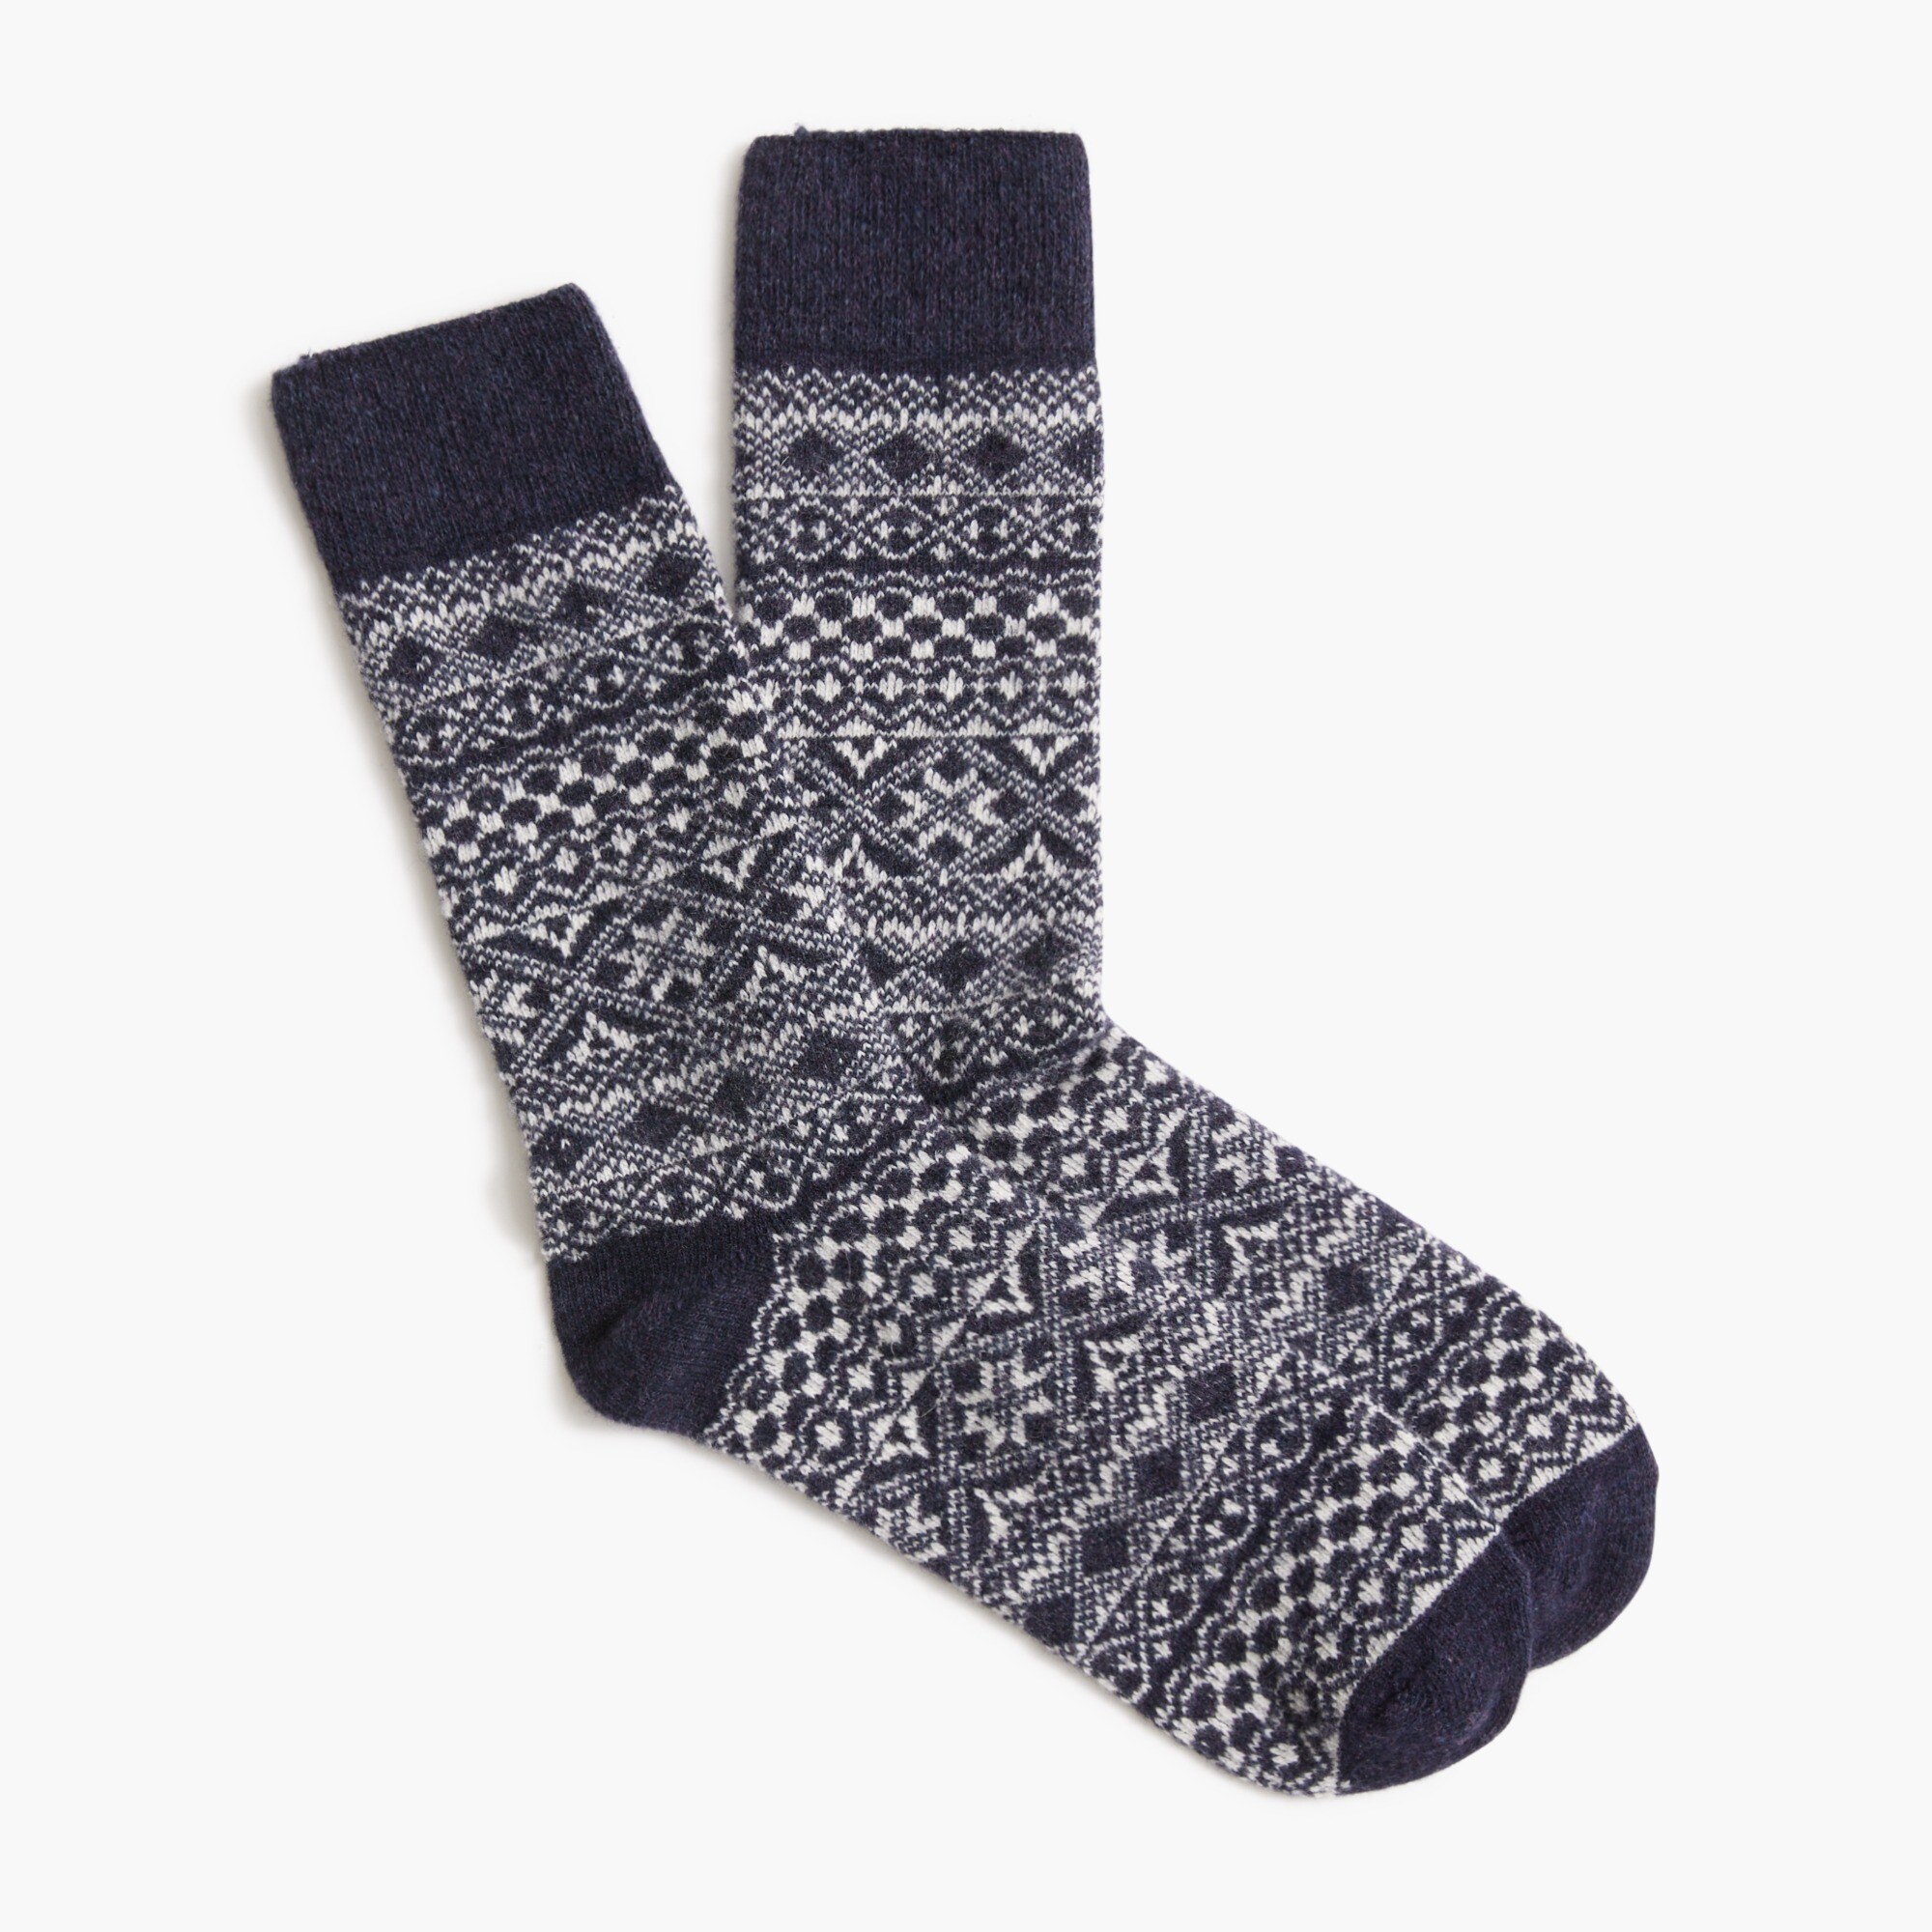  Fair Isle wool-blend socks